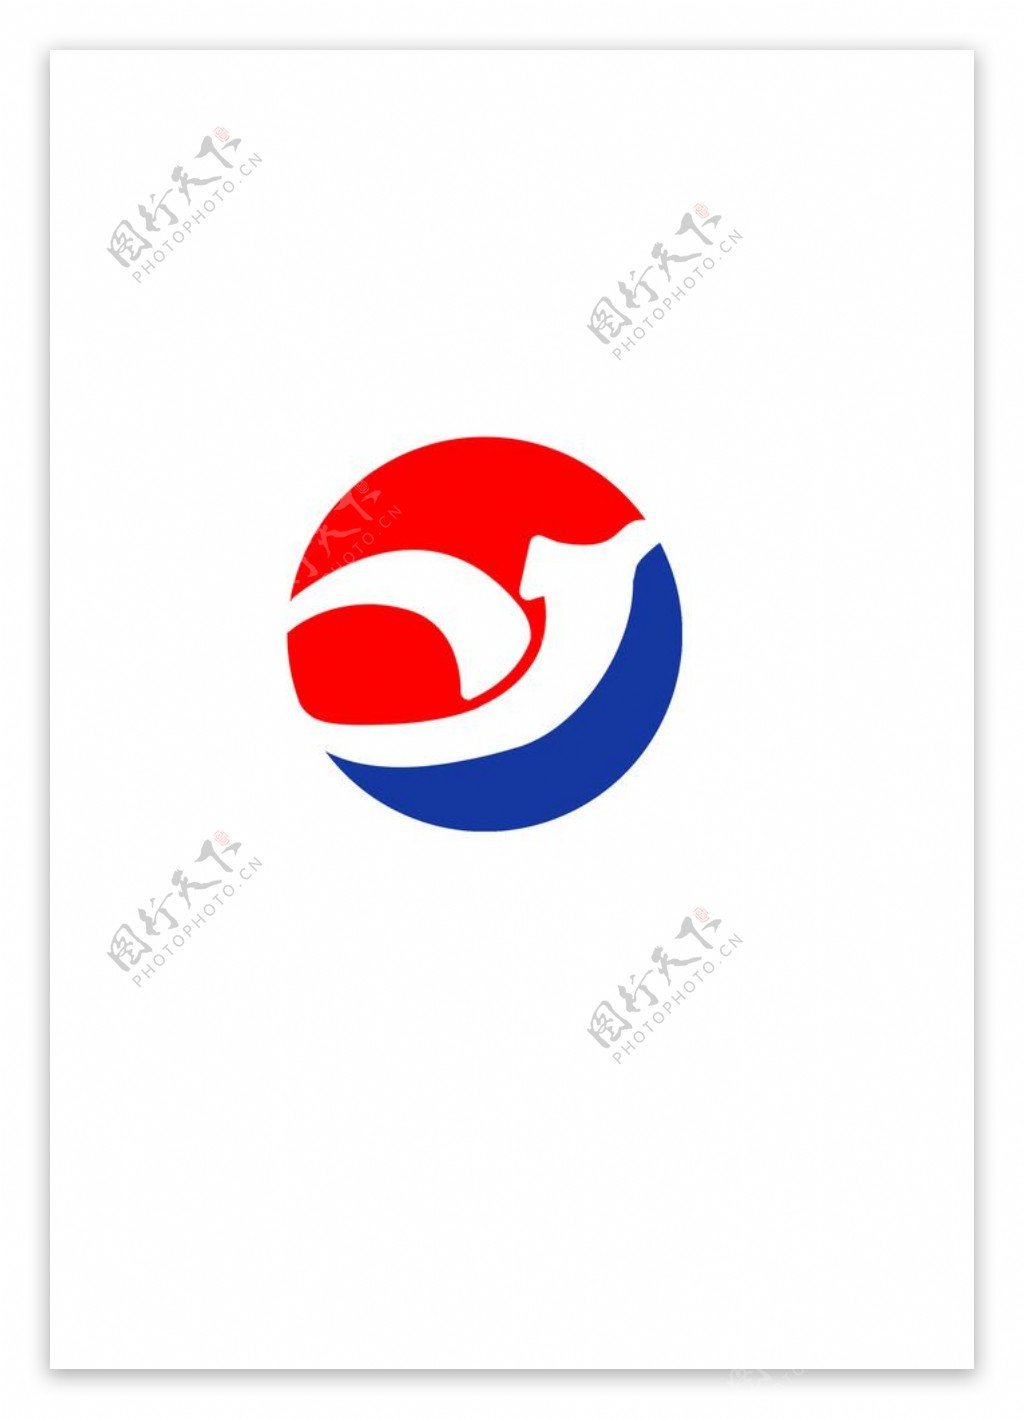 JY均益logo